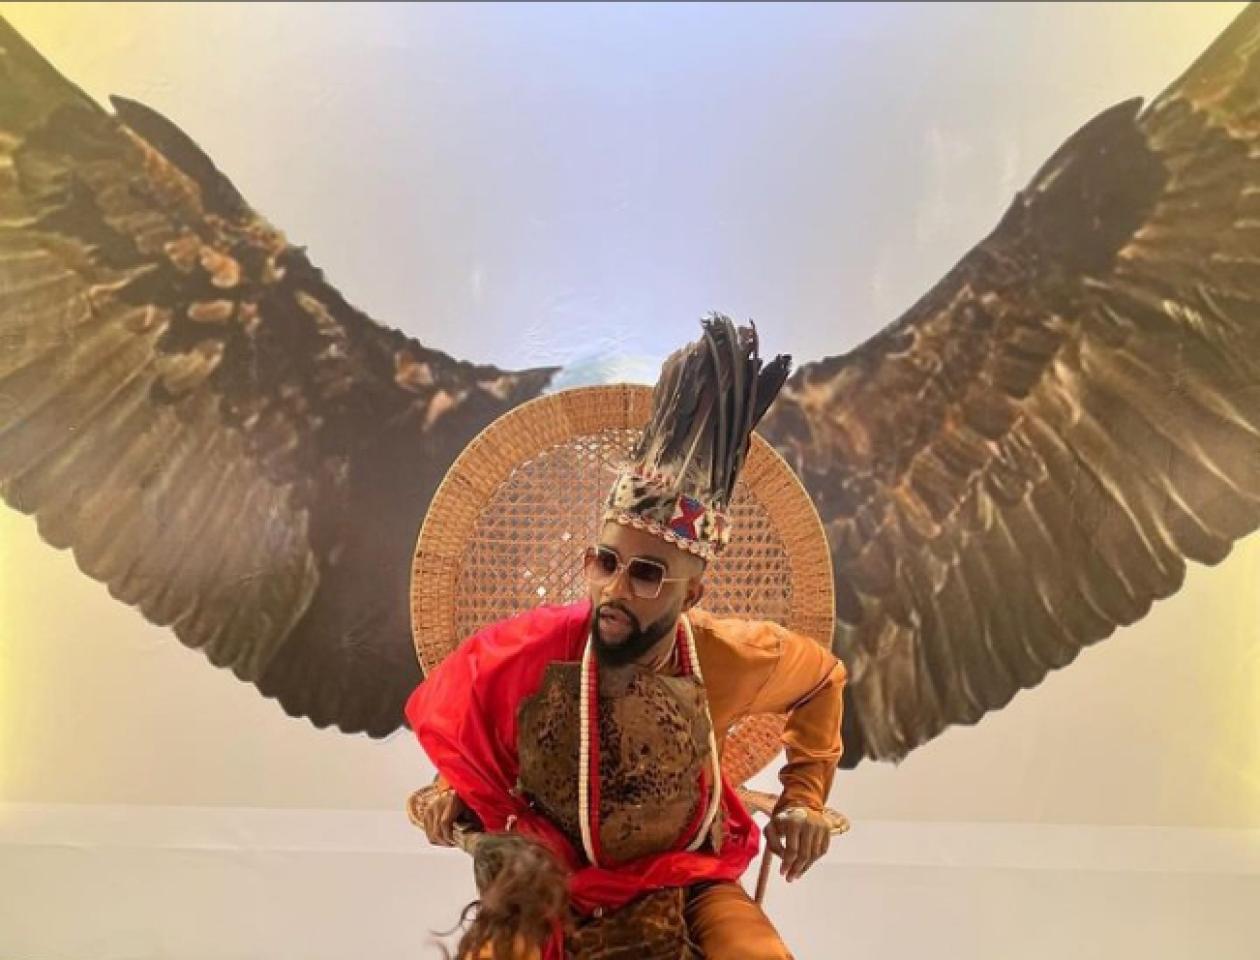 Fally Ipupa lors de son intronisation comme « prince de la culture Ekonda et Anamongo », photo Instagram 